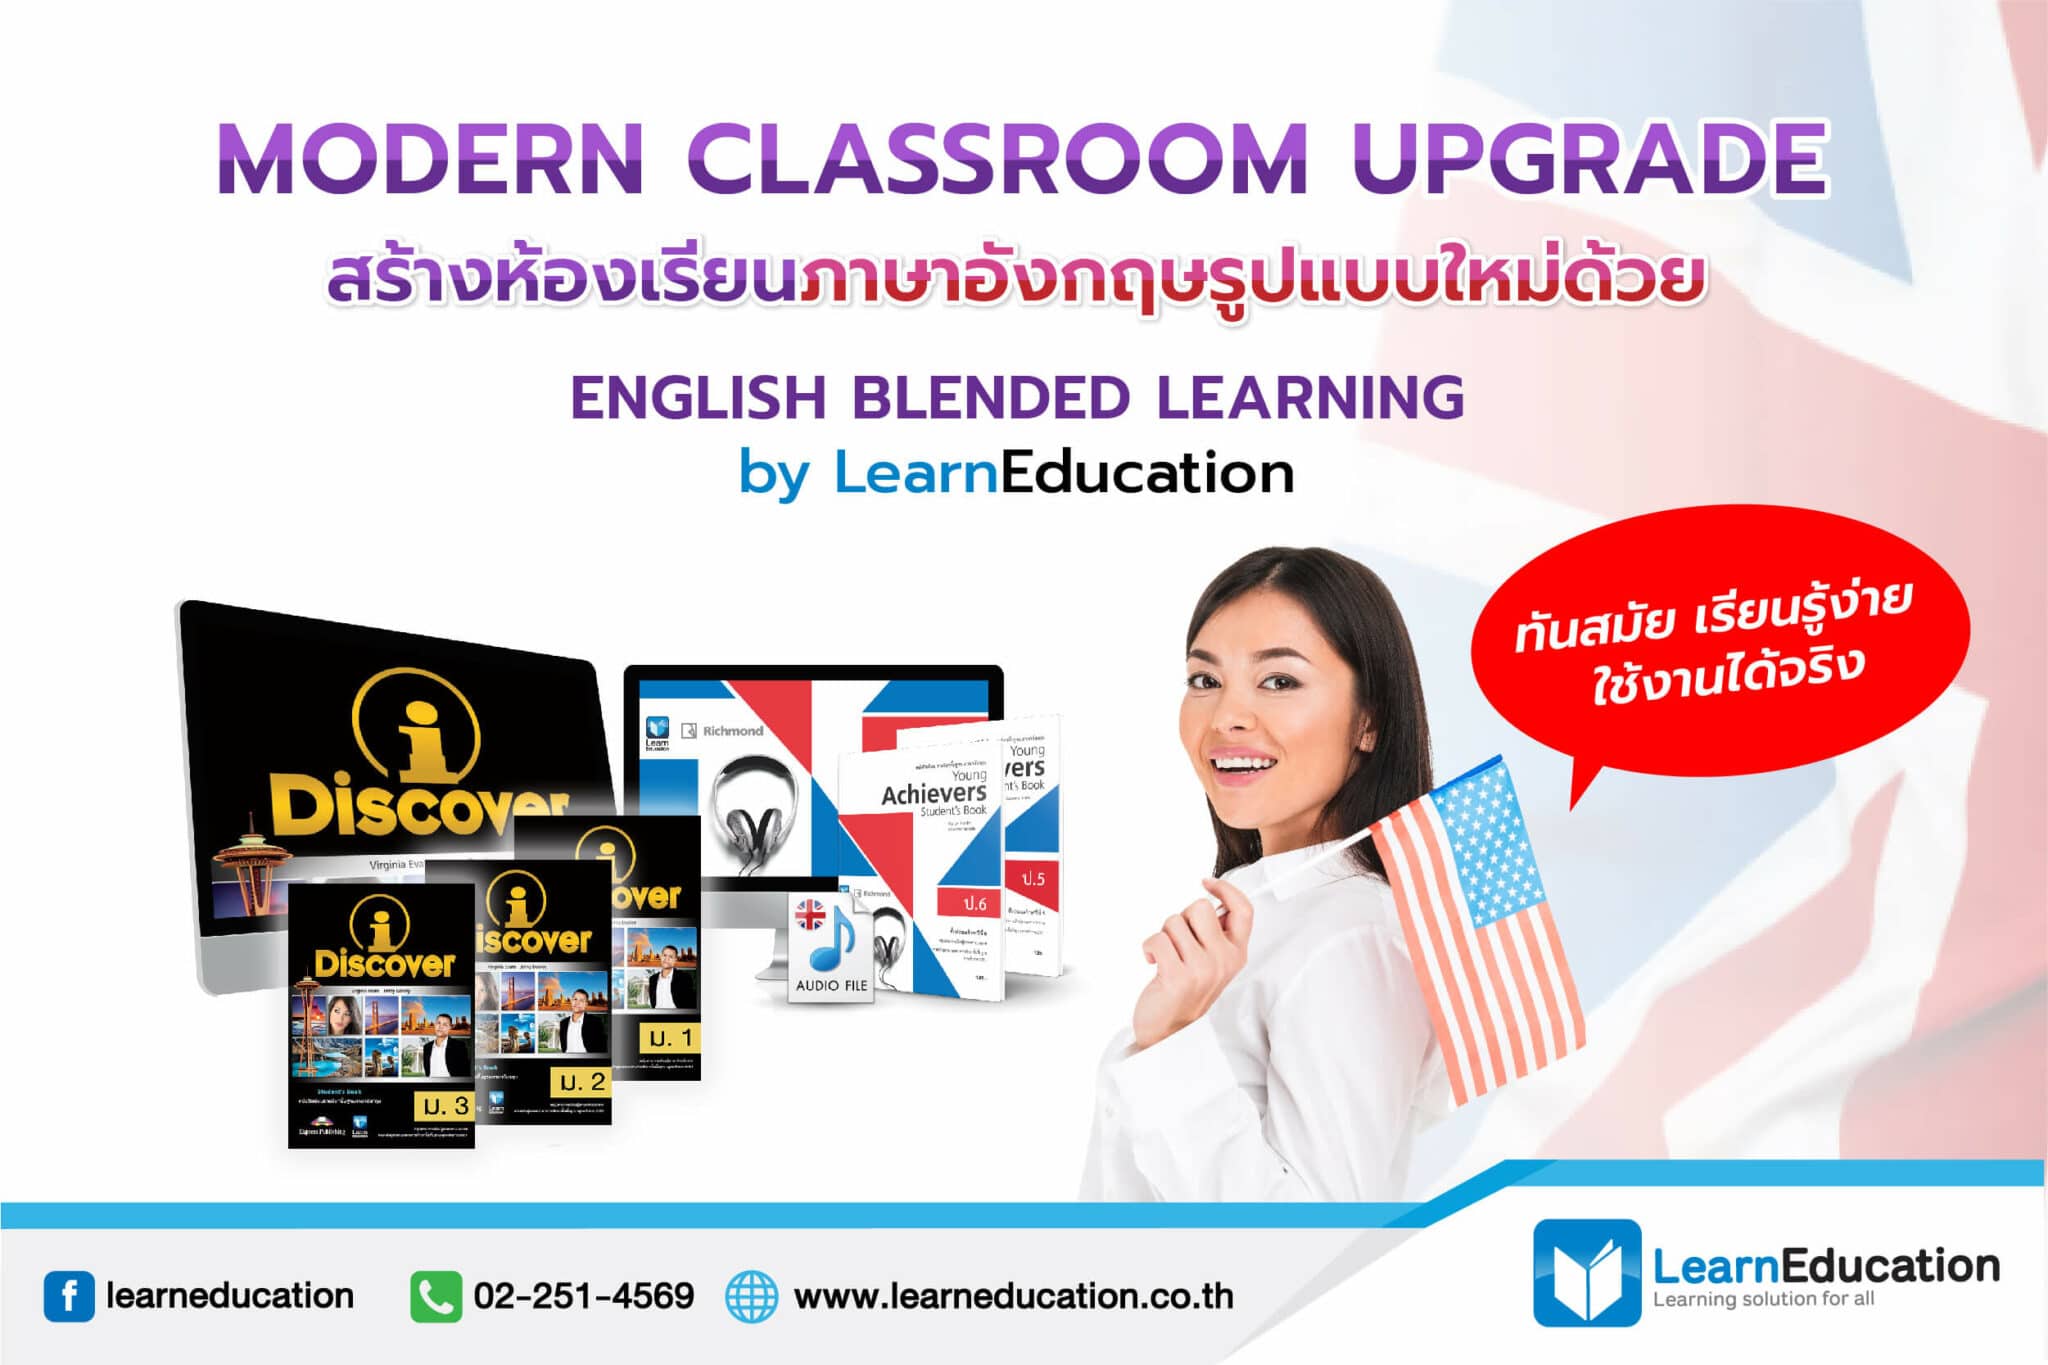 Modern Classroom Upgrade สร้างห้องเรียนภาษาอังกฤษรูปแบบใหม่ ด้วย ENGLISH BLENDED LEARNING by LearnEducation ทันสมัย เรียนรู้ง่าย ใช้งานได้จริง